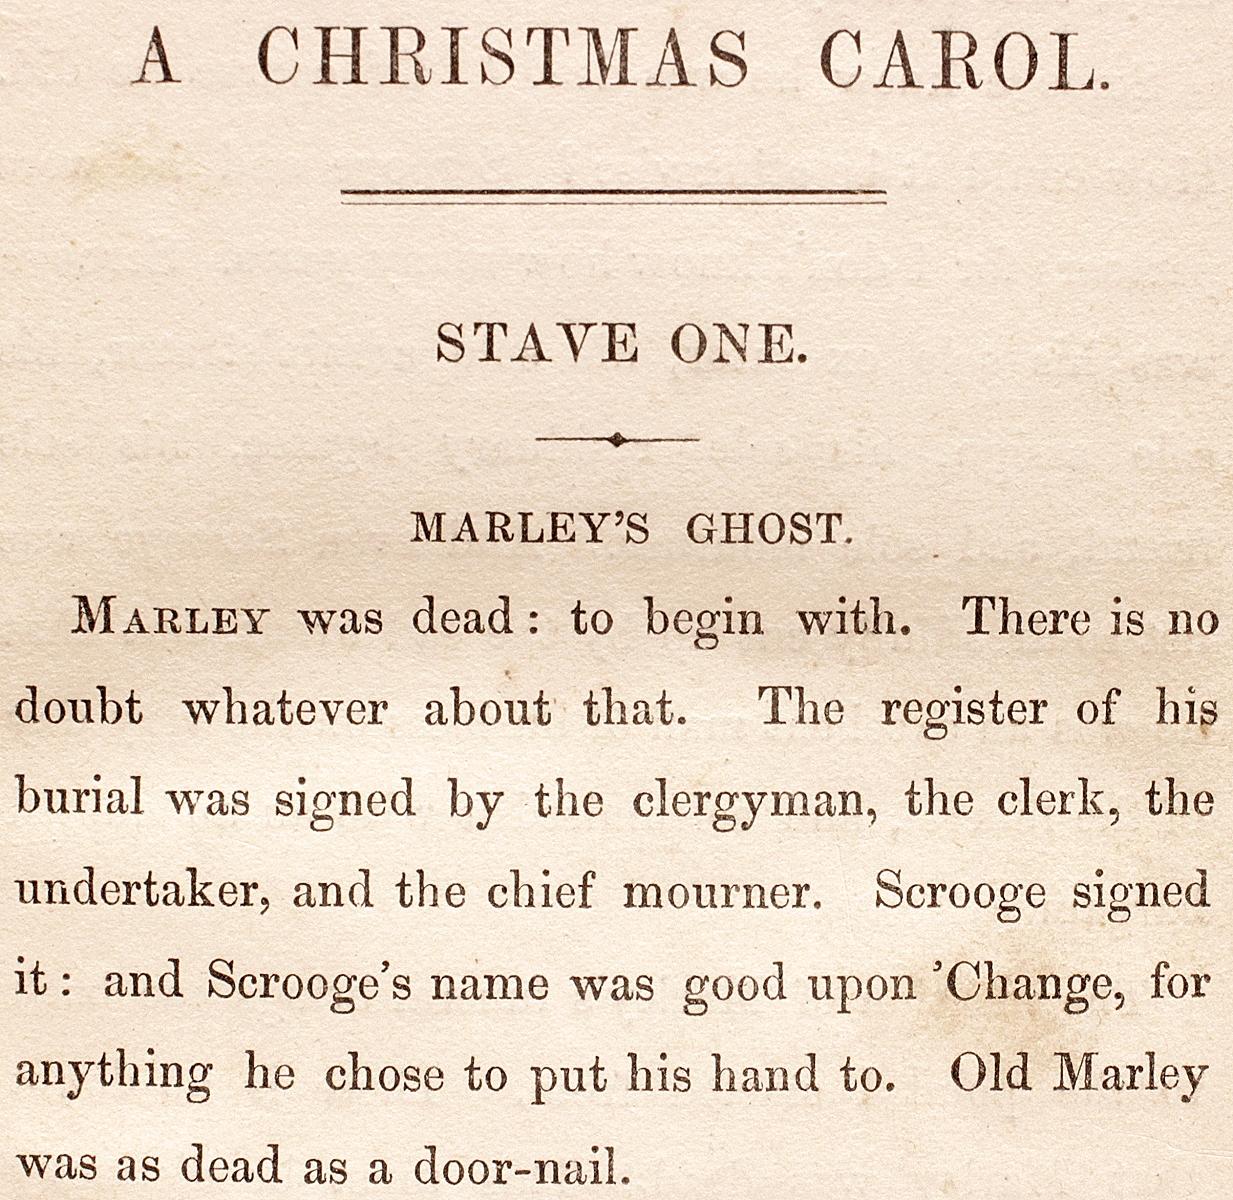 Fabric Dickens, Charles, a Christmas Carol, Third Edition, 1843, in Original Cloth